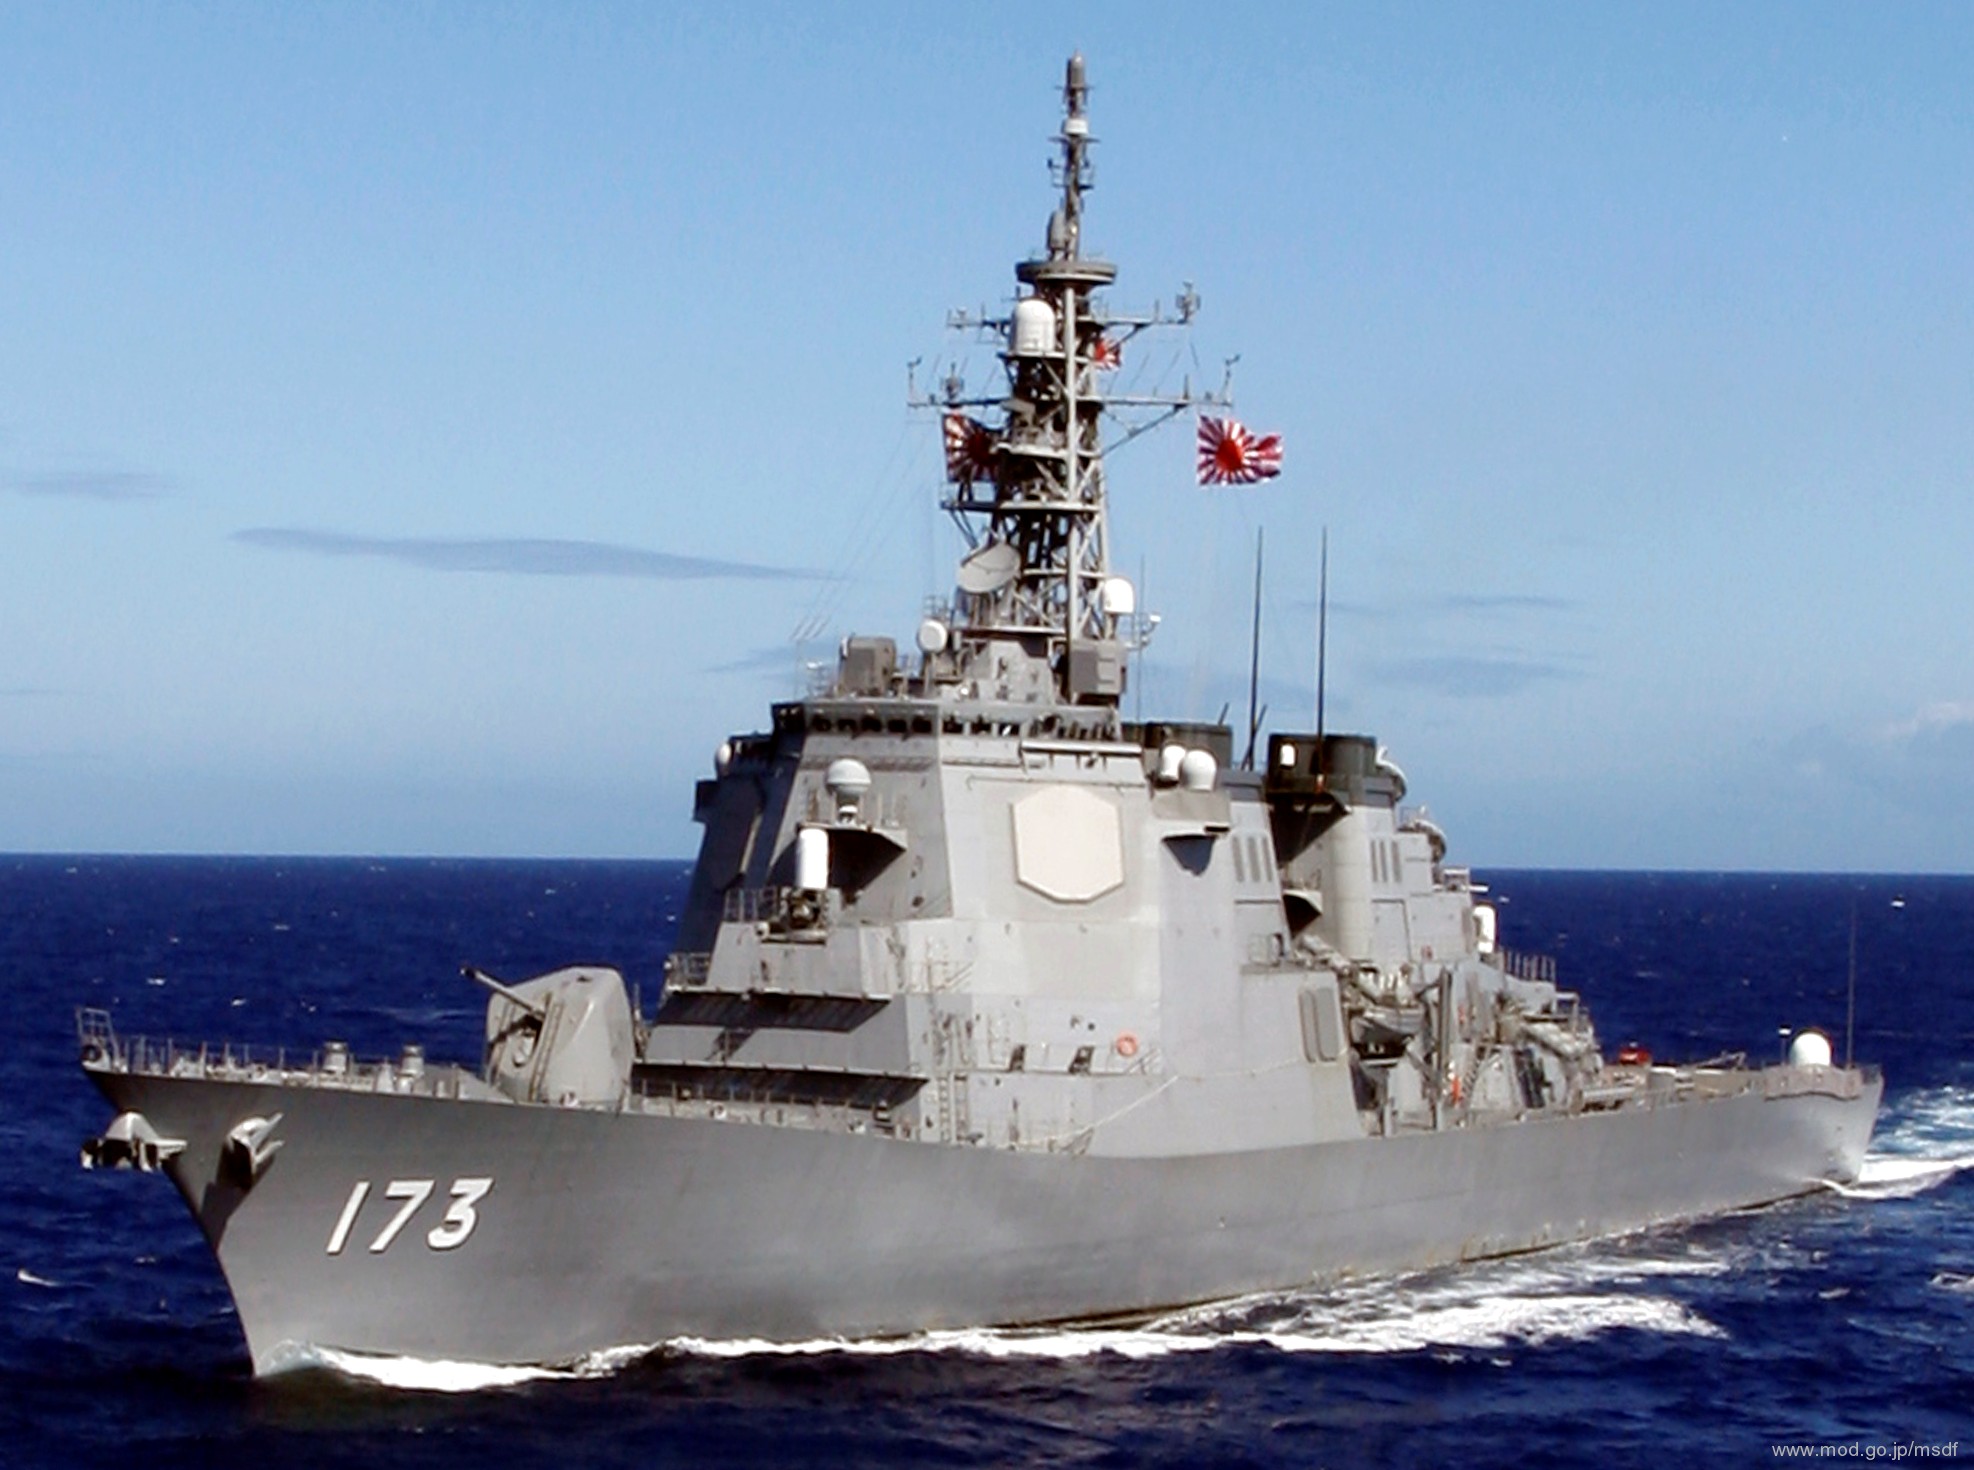 ddg-173 js kongo class guided missile destroyer aegis japan maritime self defense force jmsdf 06